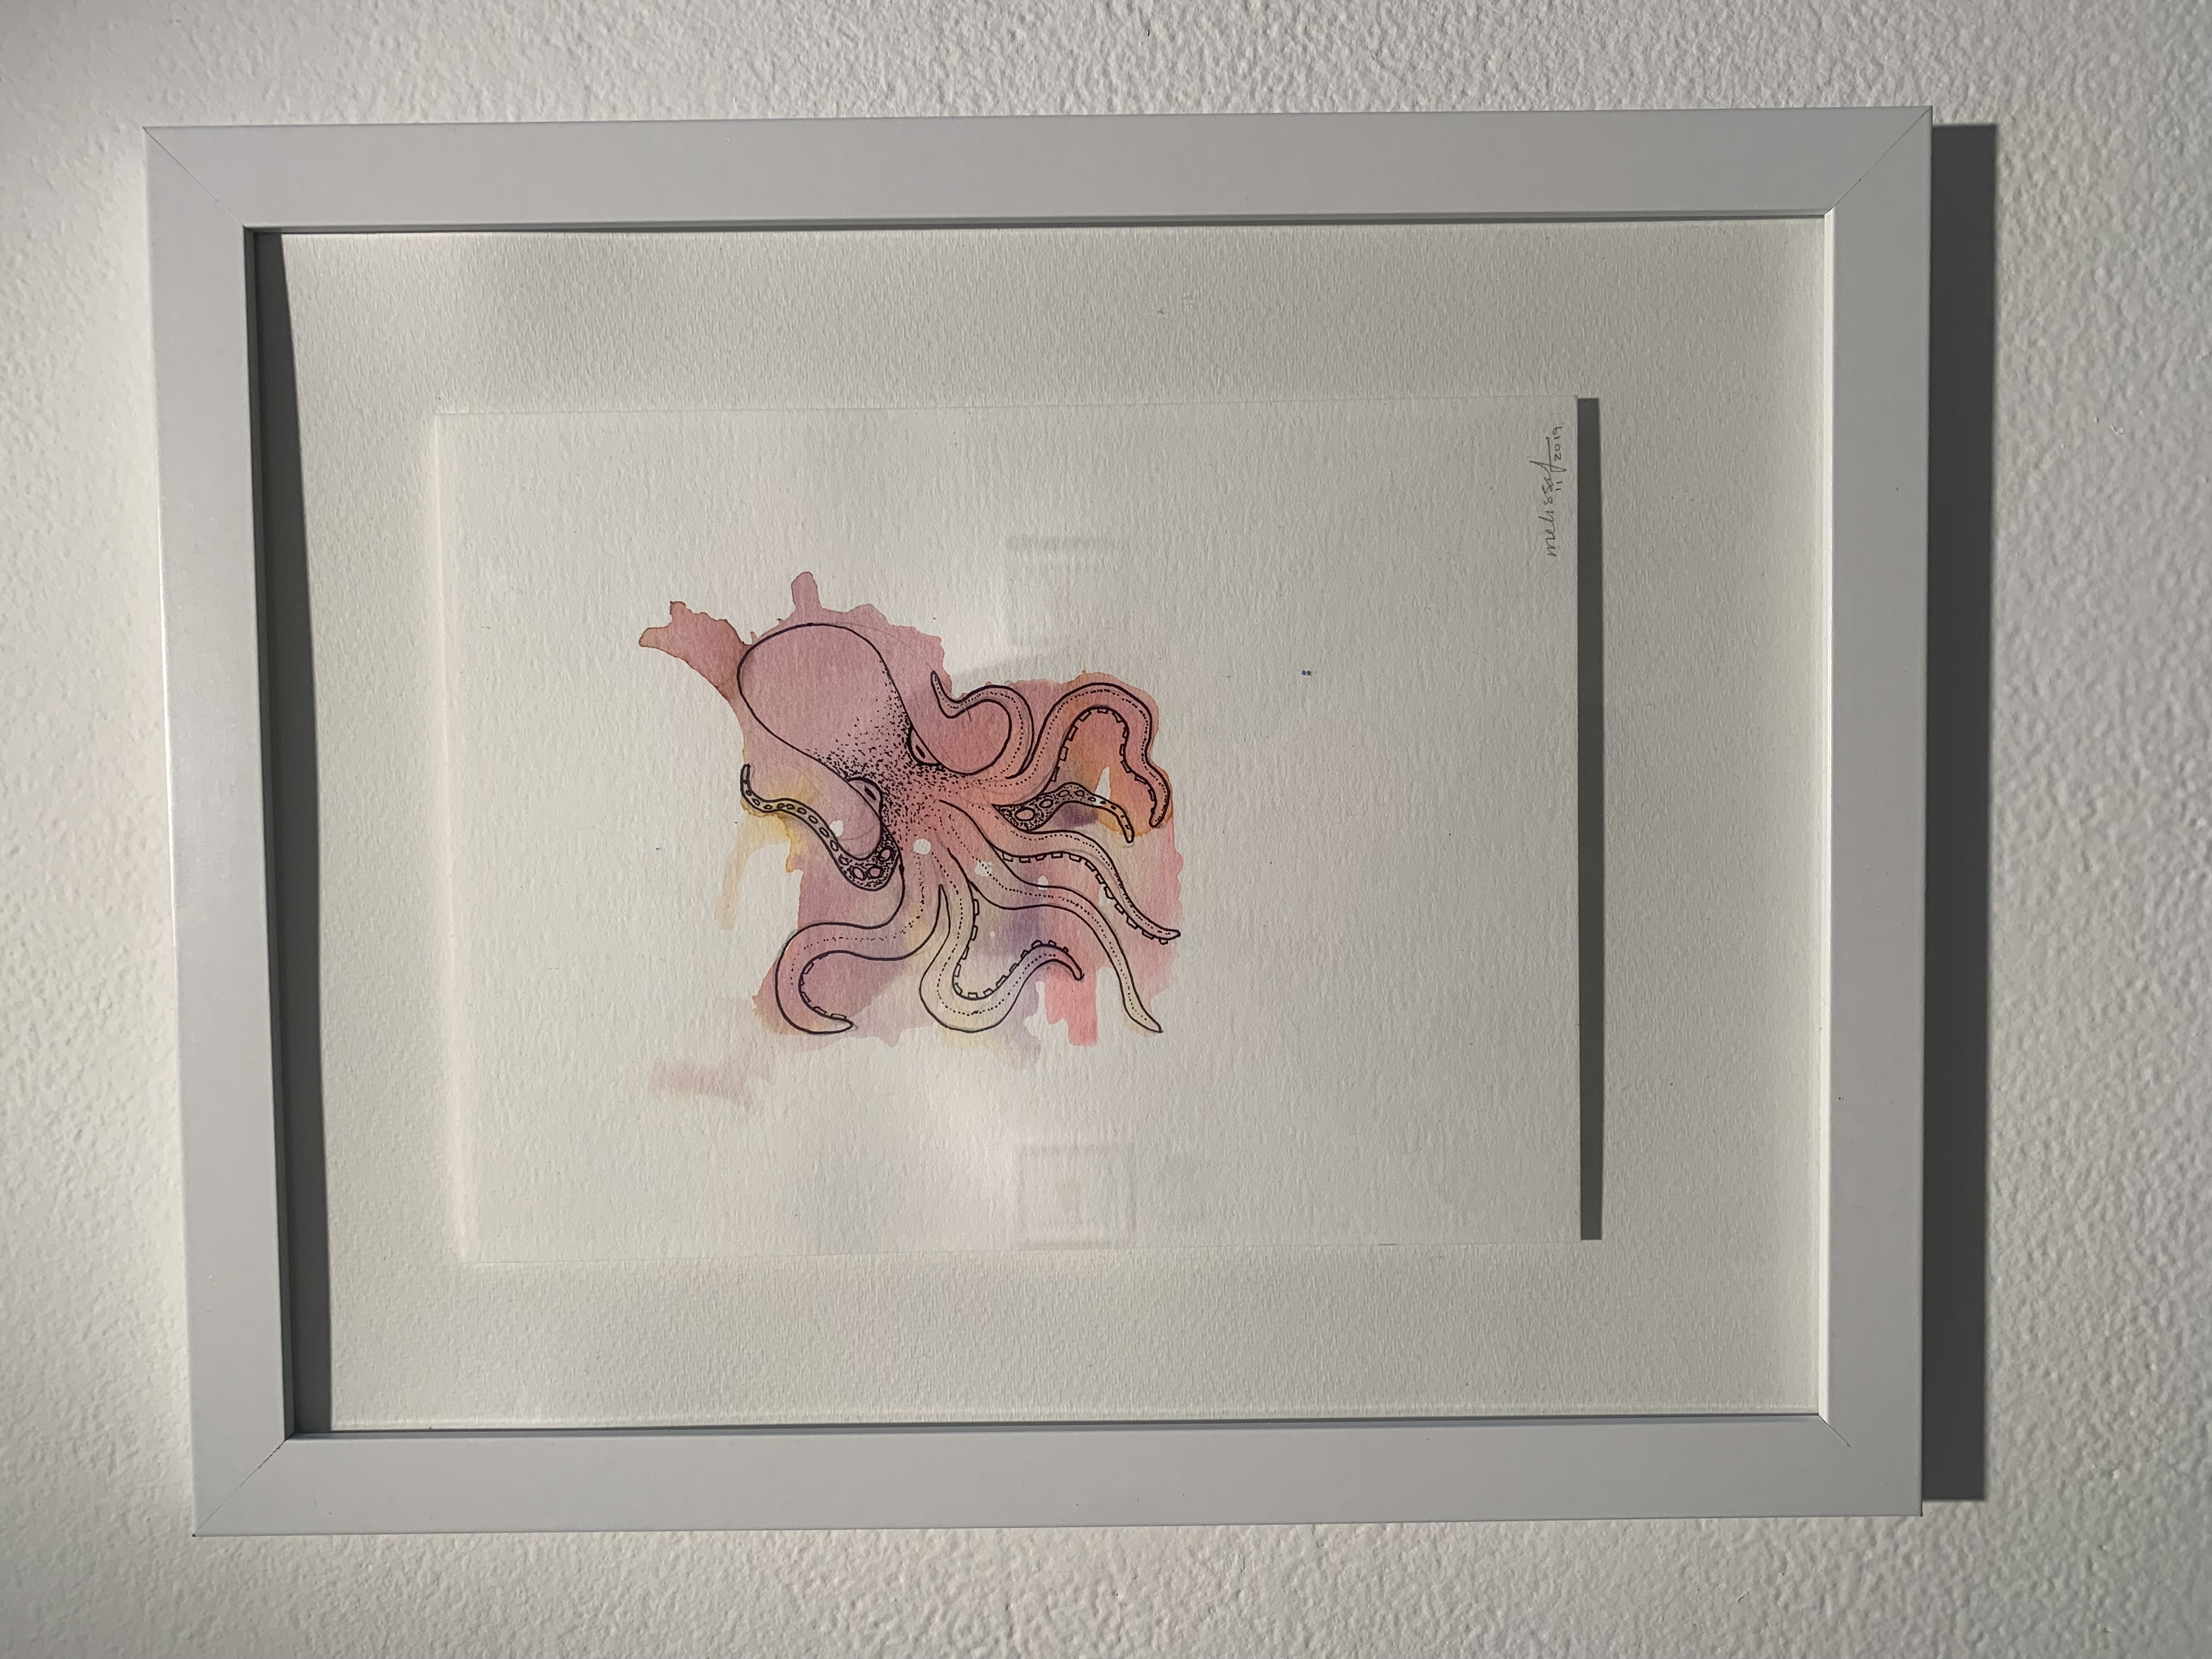 003: Image description: pink octopus on white background